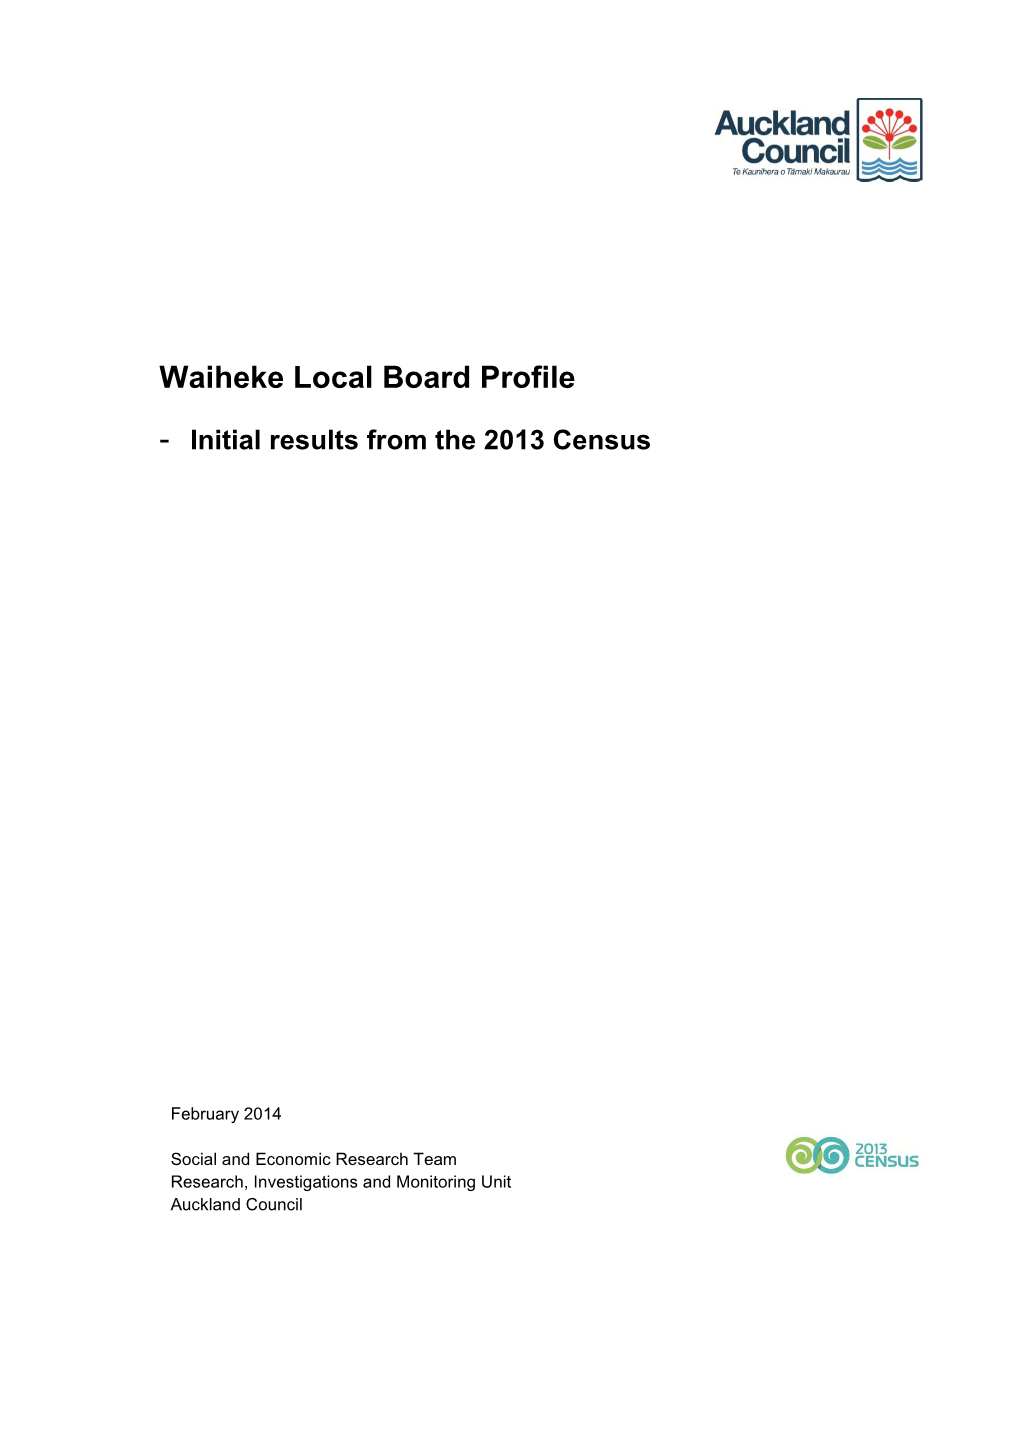 Waiheke Local Board Census Profile 2013